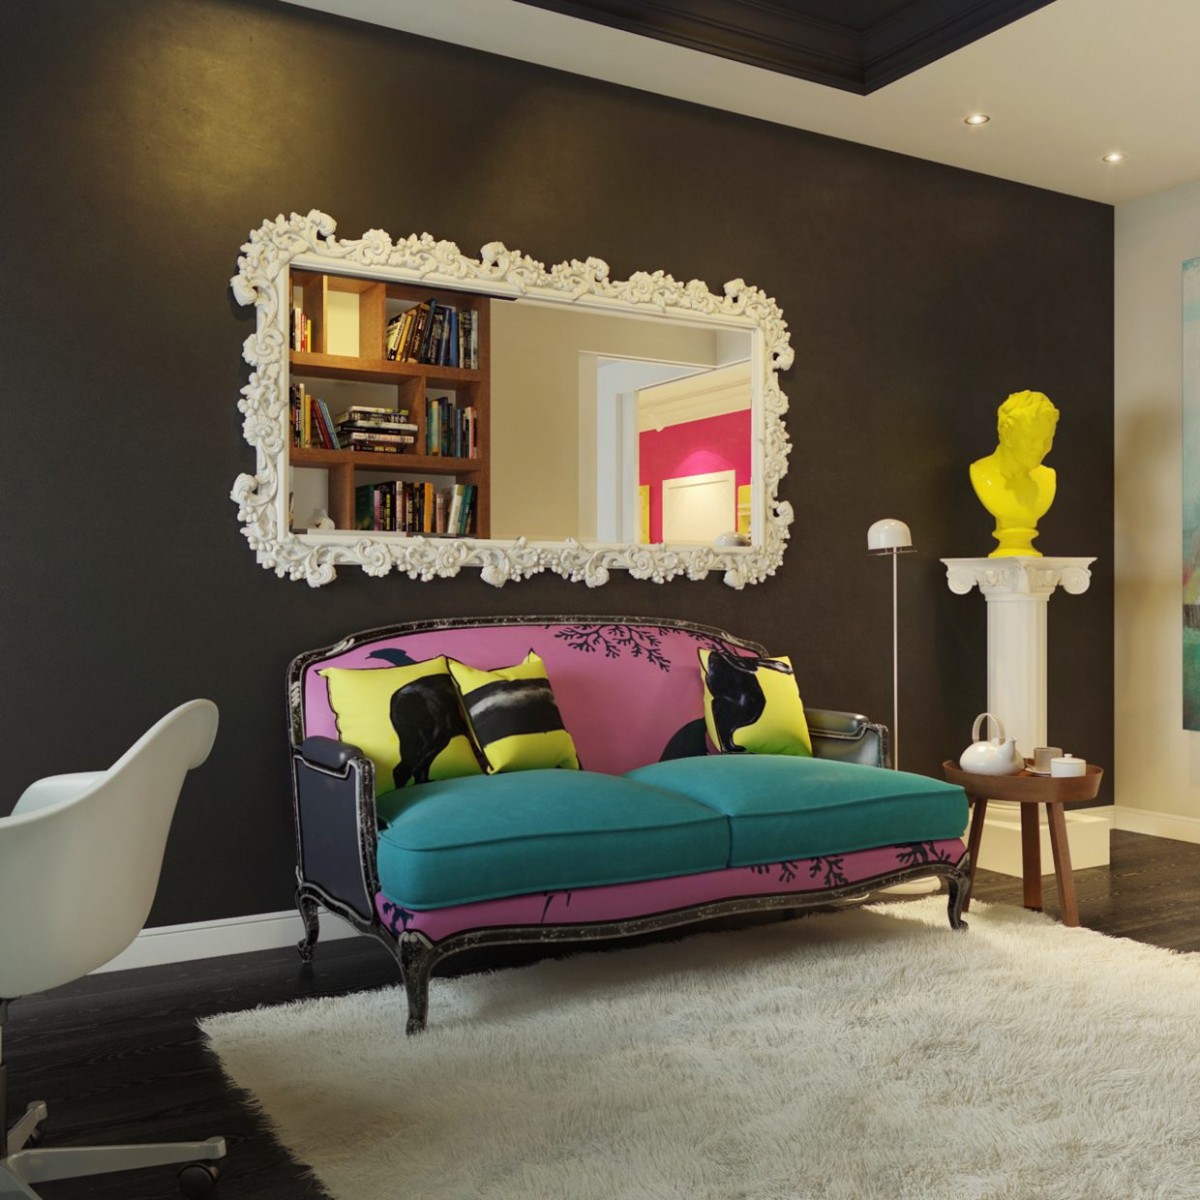 Fascinating pop art ideas for inspiring your interior home